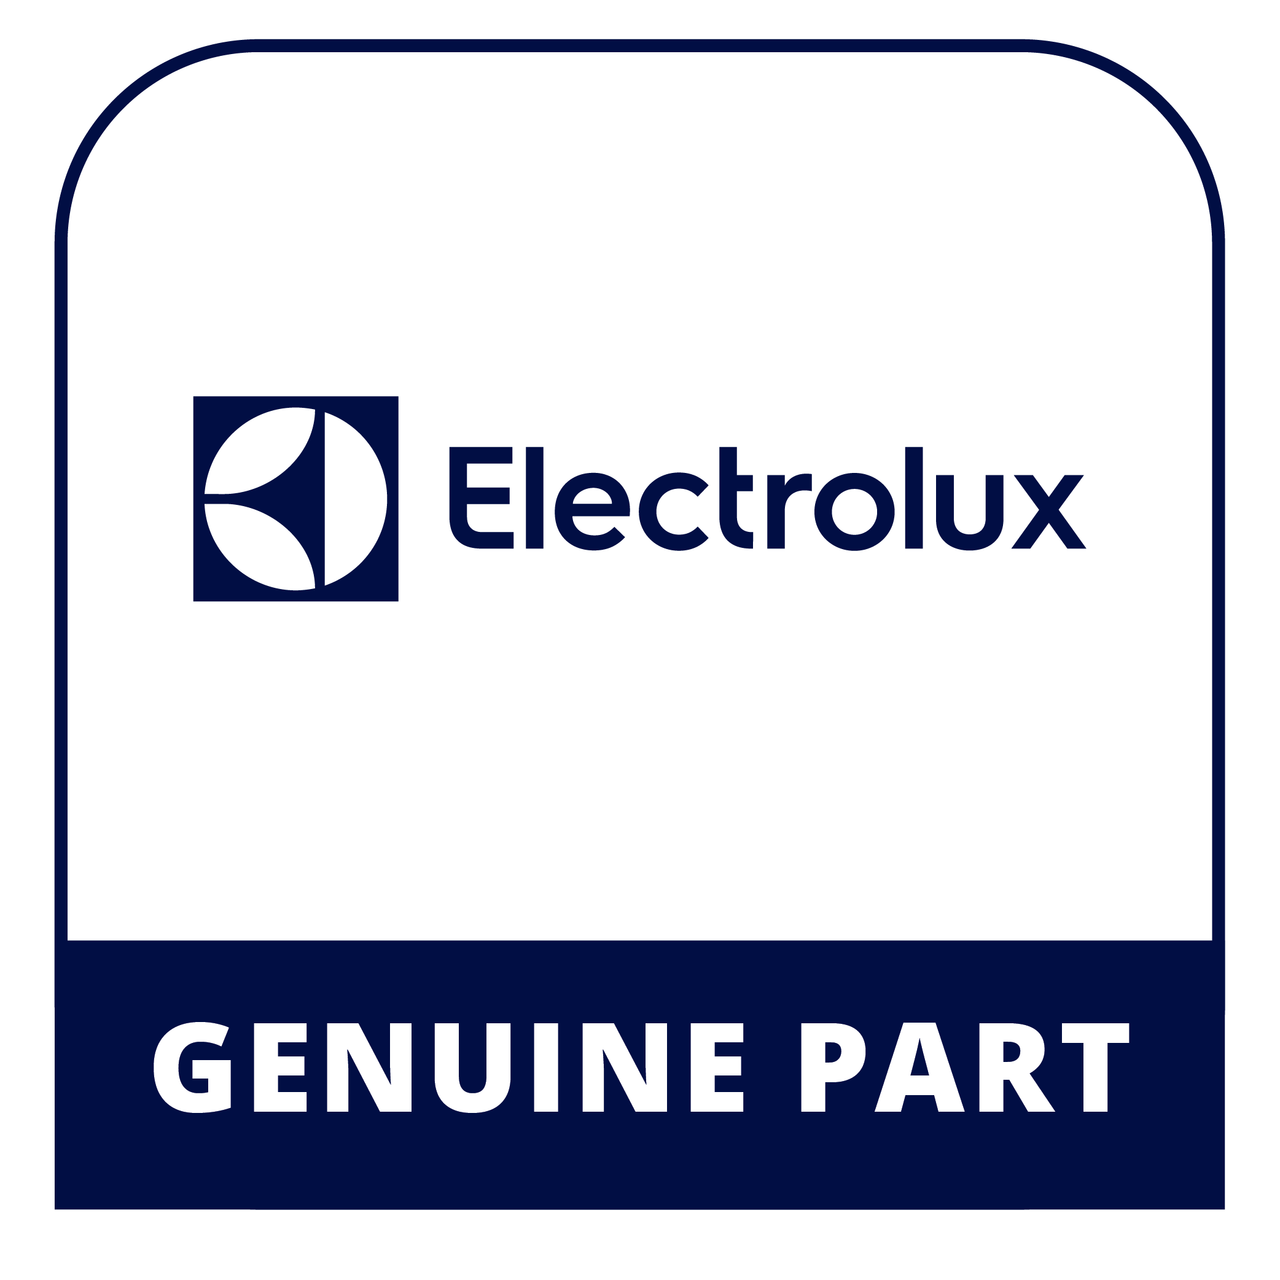 Frigidaire - Electrolux P242130520 Slide Assembly - Genuine Electrolux Part